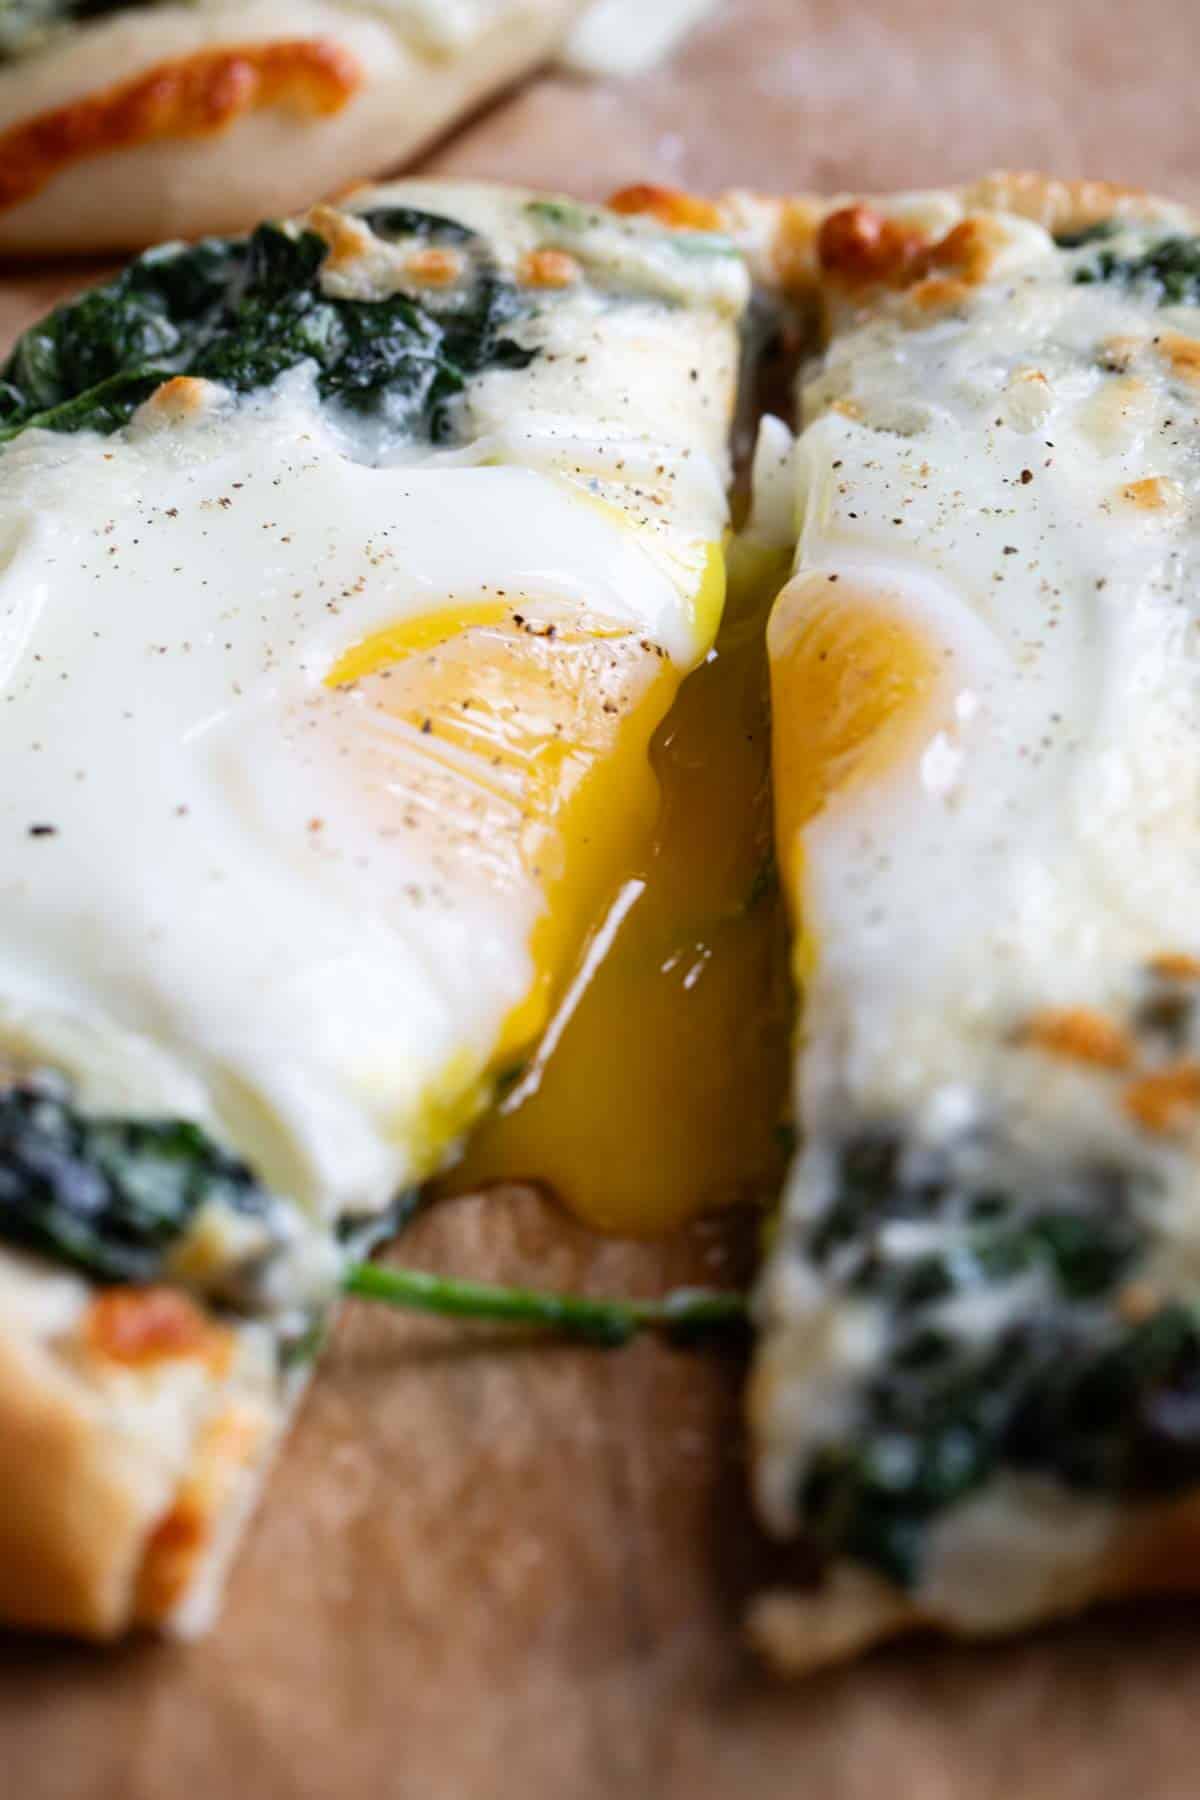 Egg pizza cut in half with egg yolk dripping.